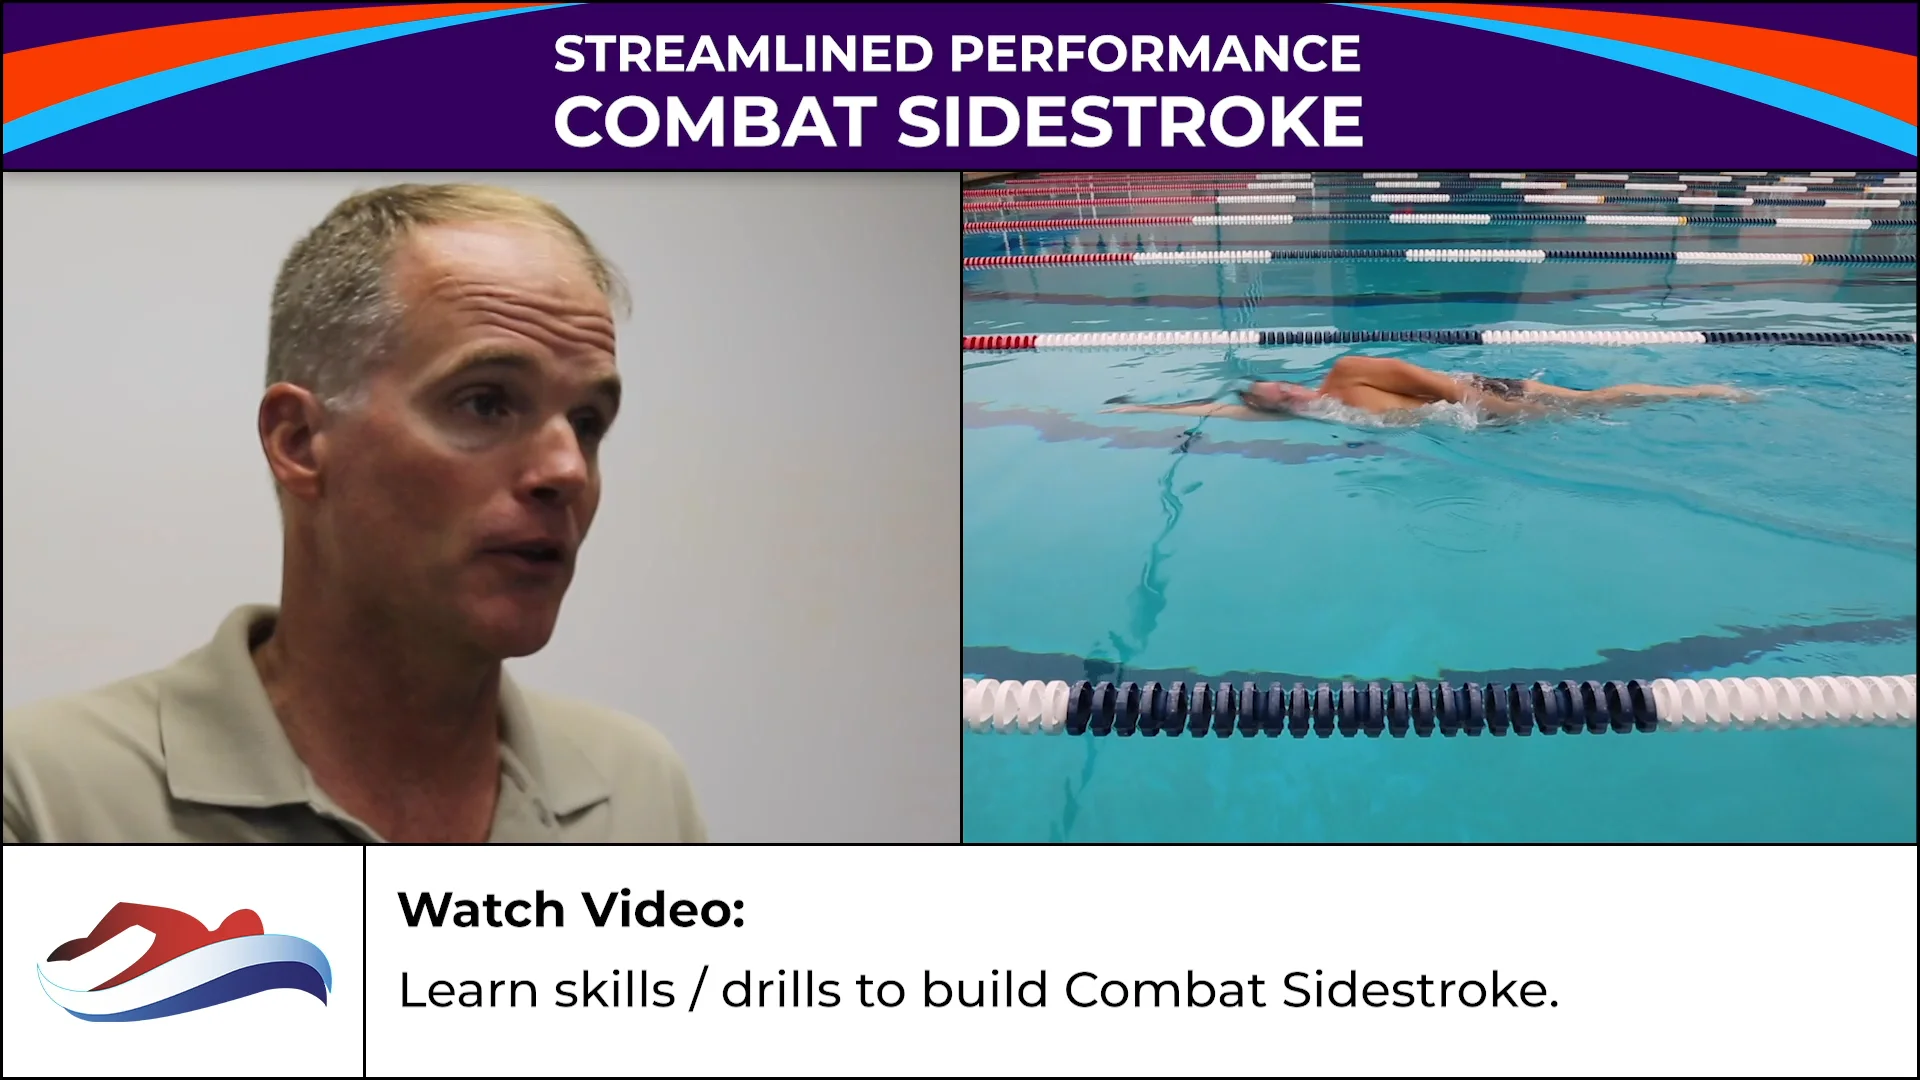 Combat Side Stroke Promo Video - Streamlined Performance on Vimeo